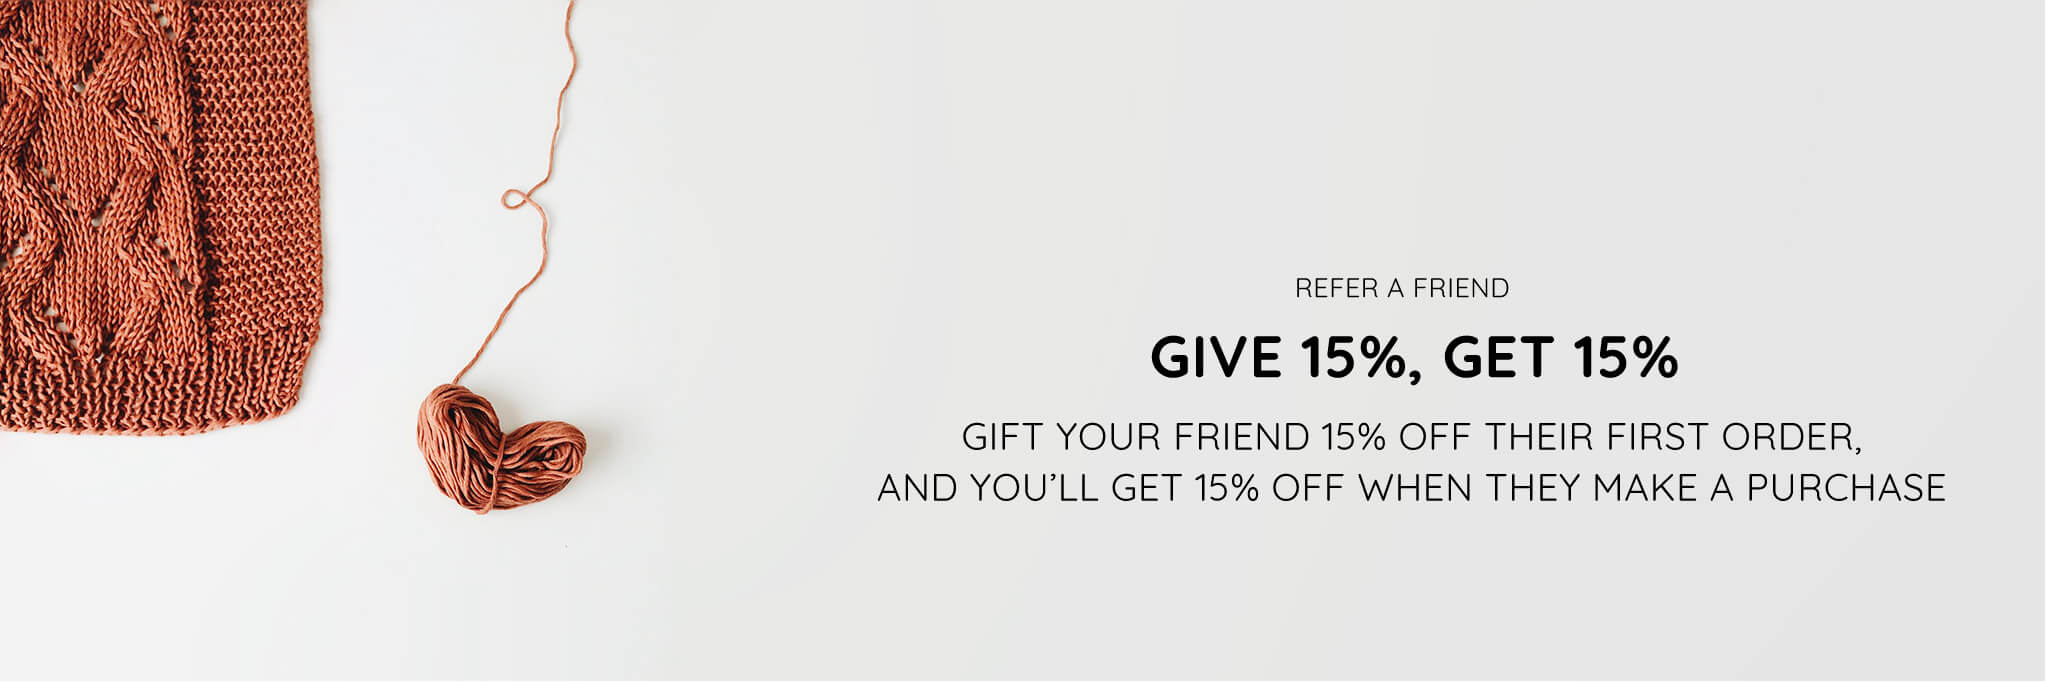 Rewards Program - Refer a friend and get 15% off